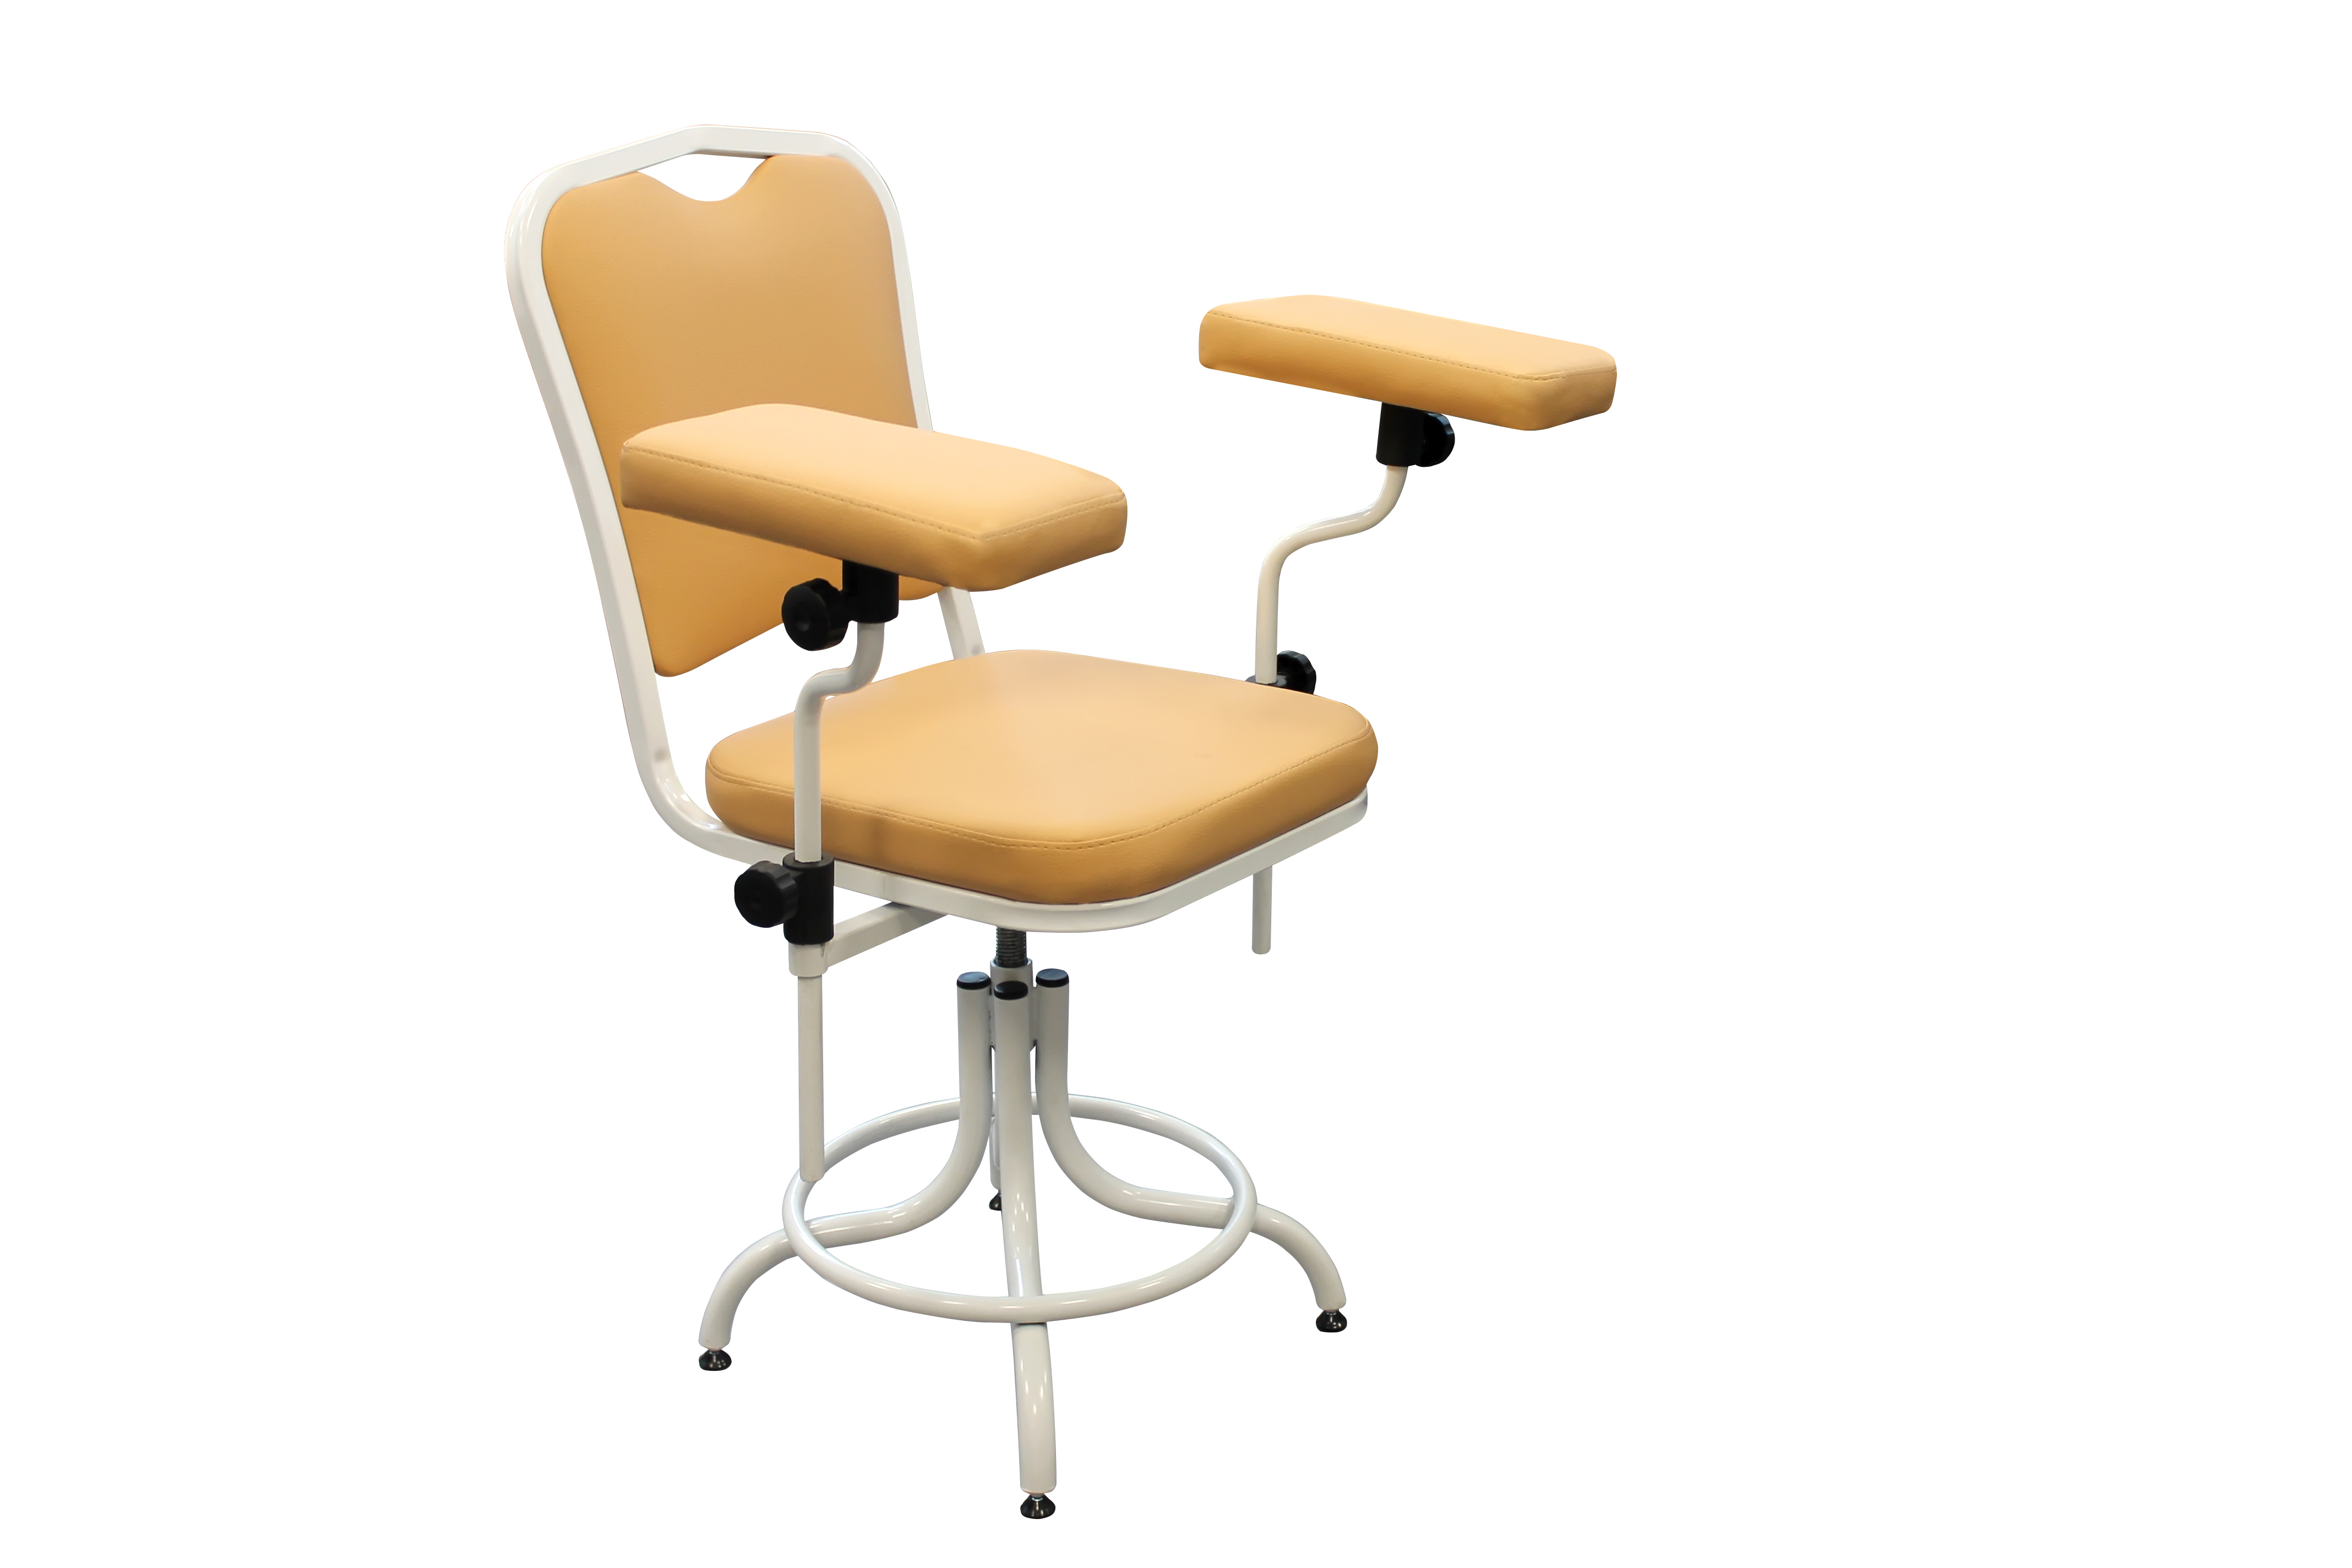 Кресло донора. Кресло на ГАЗ-лифте др02(1)- для забора крови. Донорский стул (кресло) др01. Донорское кресло для забора крови. Кресло донорское Ависта.